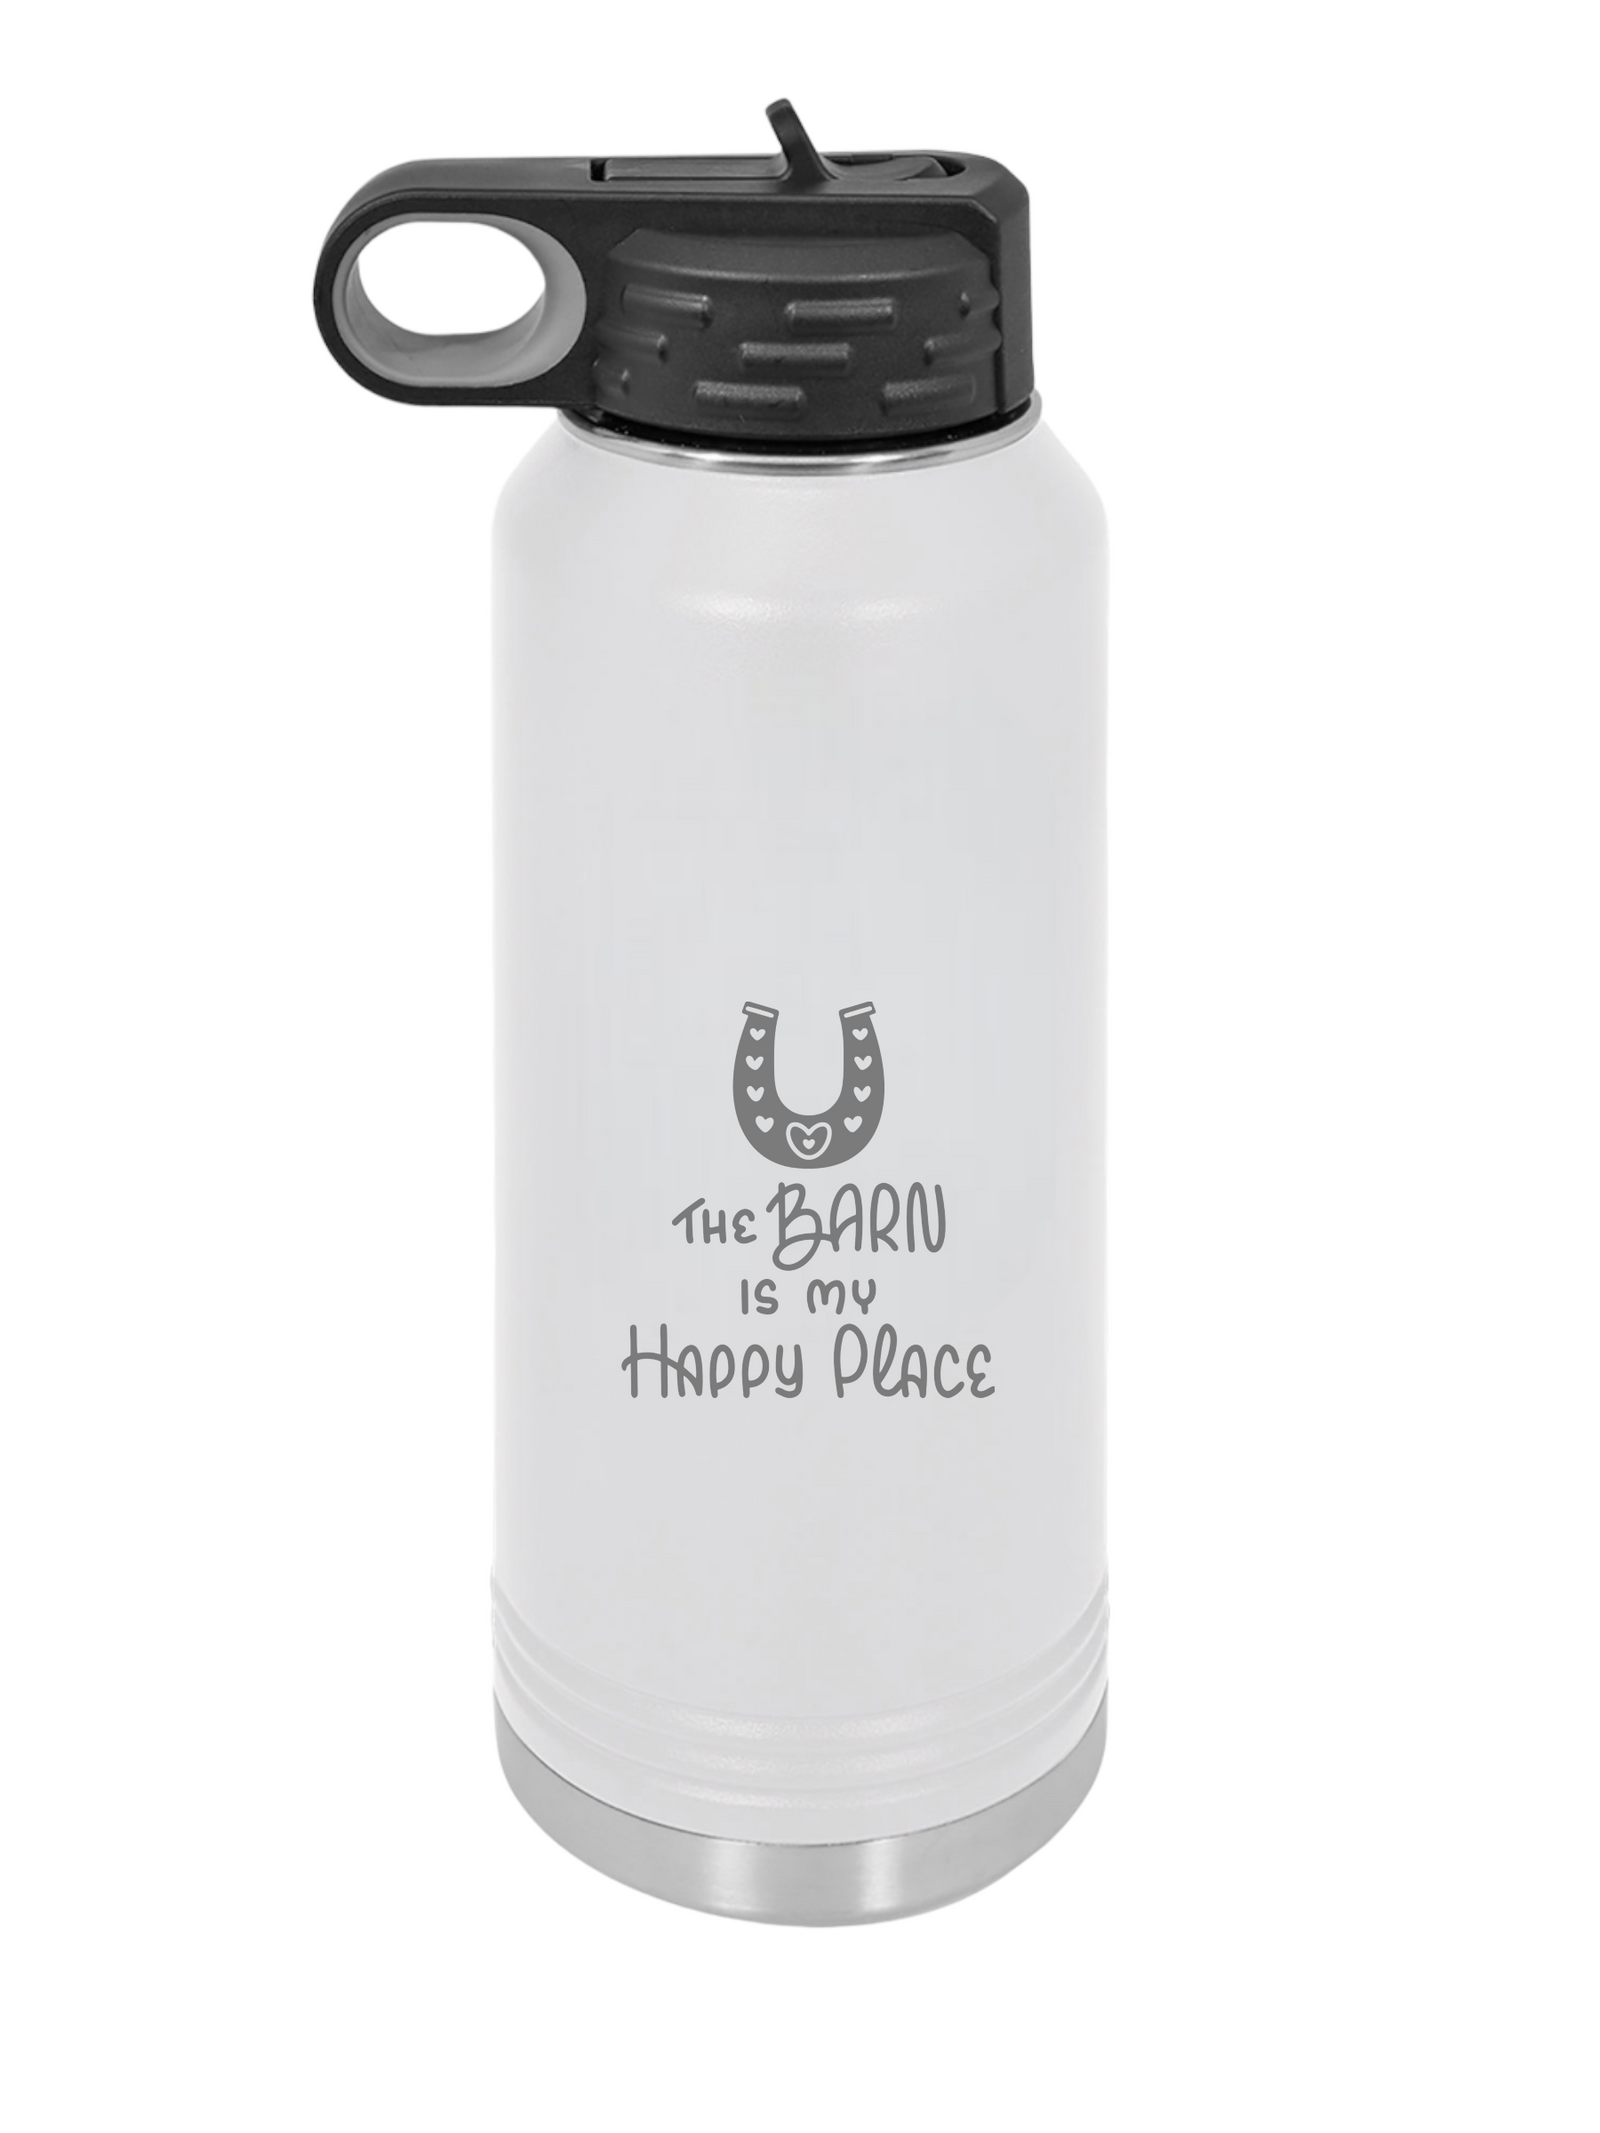 Horse Engraved Water Bottle